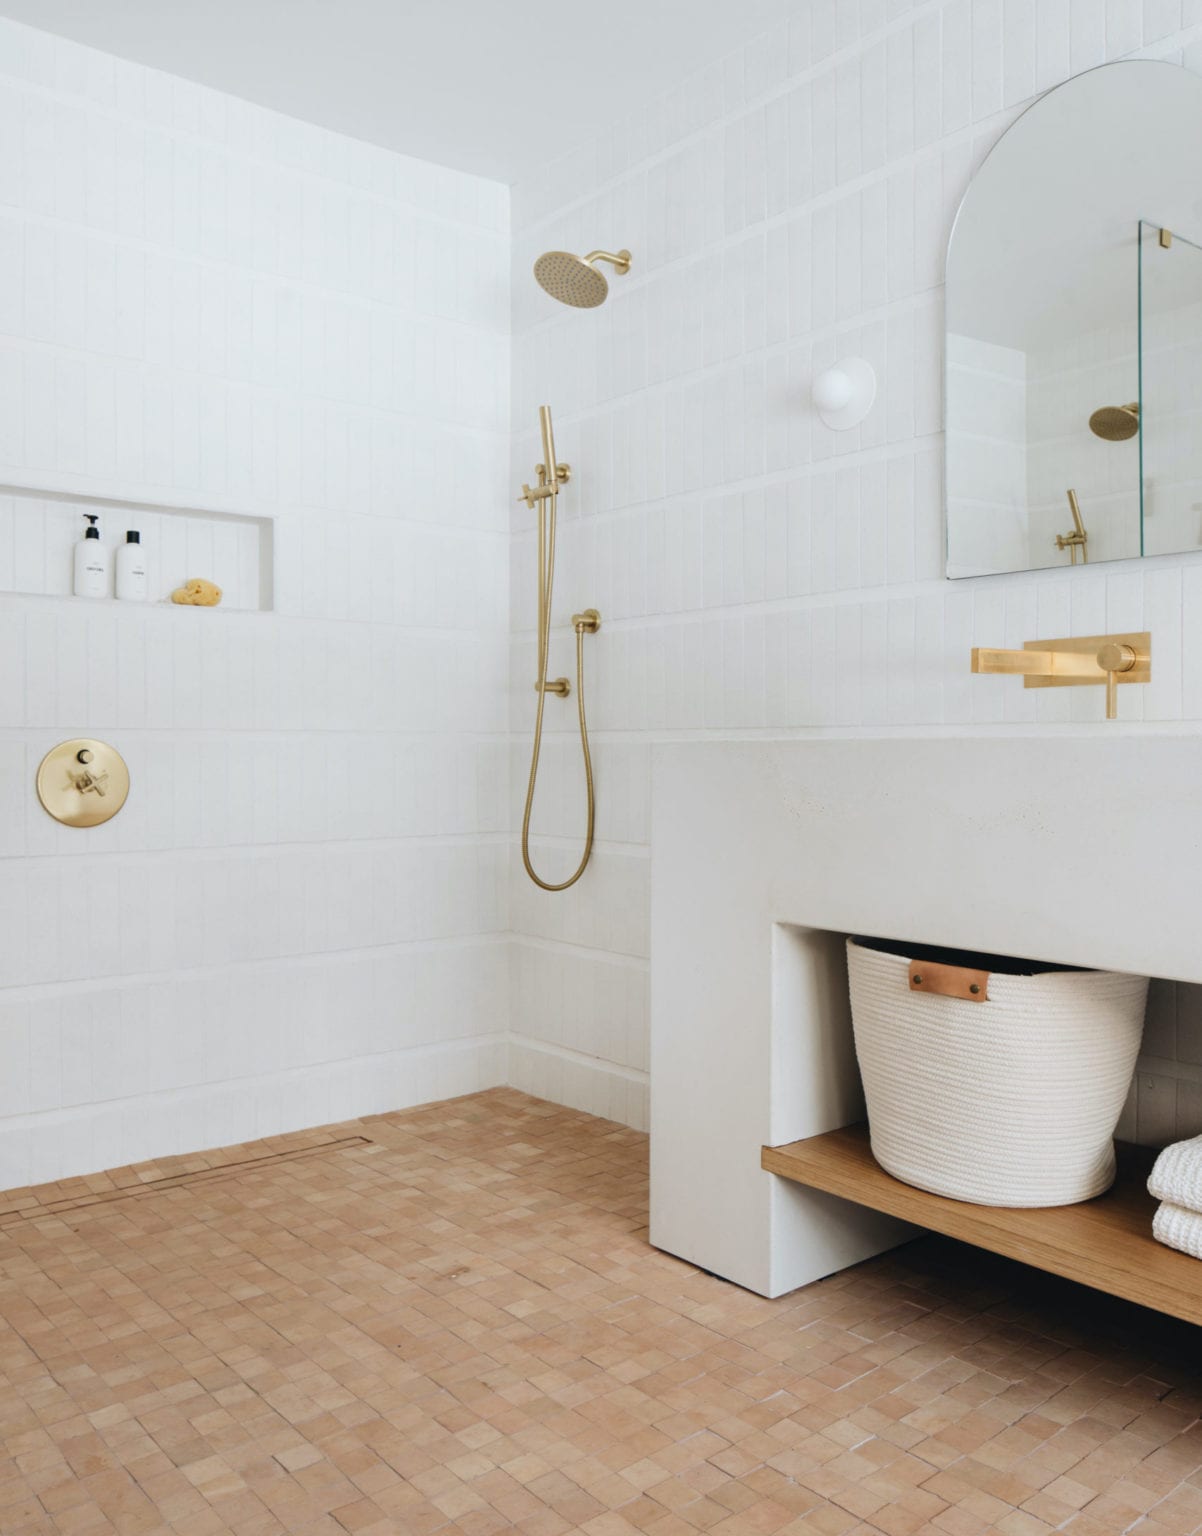 sarah sherman samuel bathroom with clé tile zellige unglazed terracotta natural 2x2 square tiles on the floor